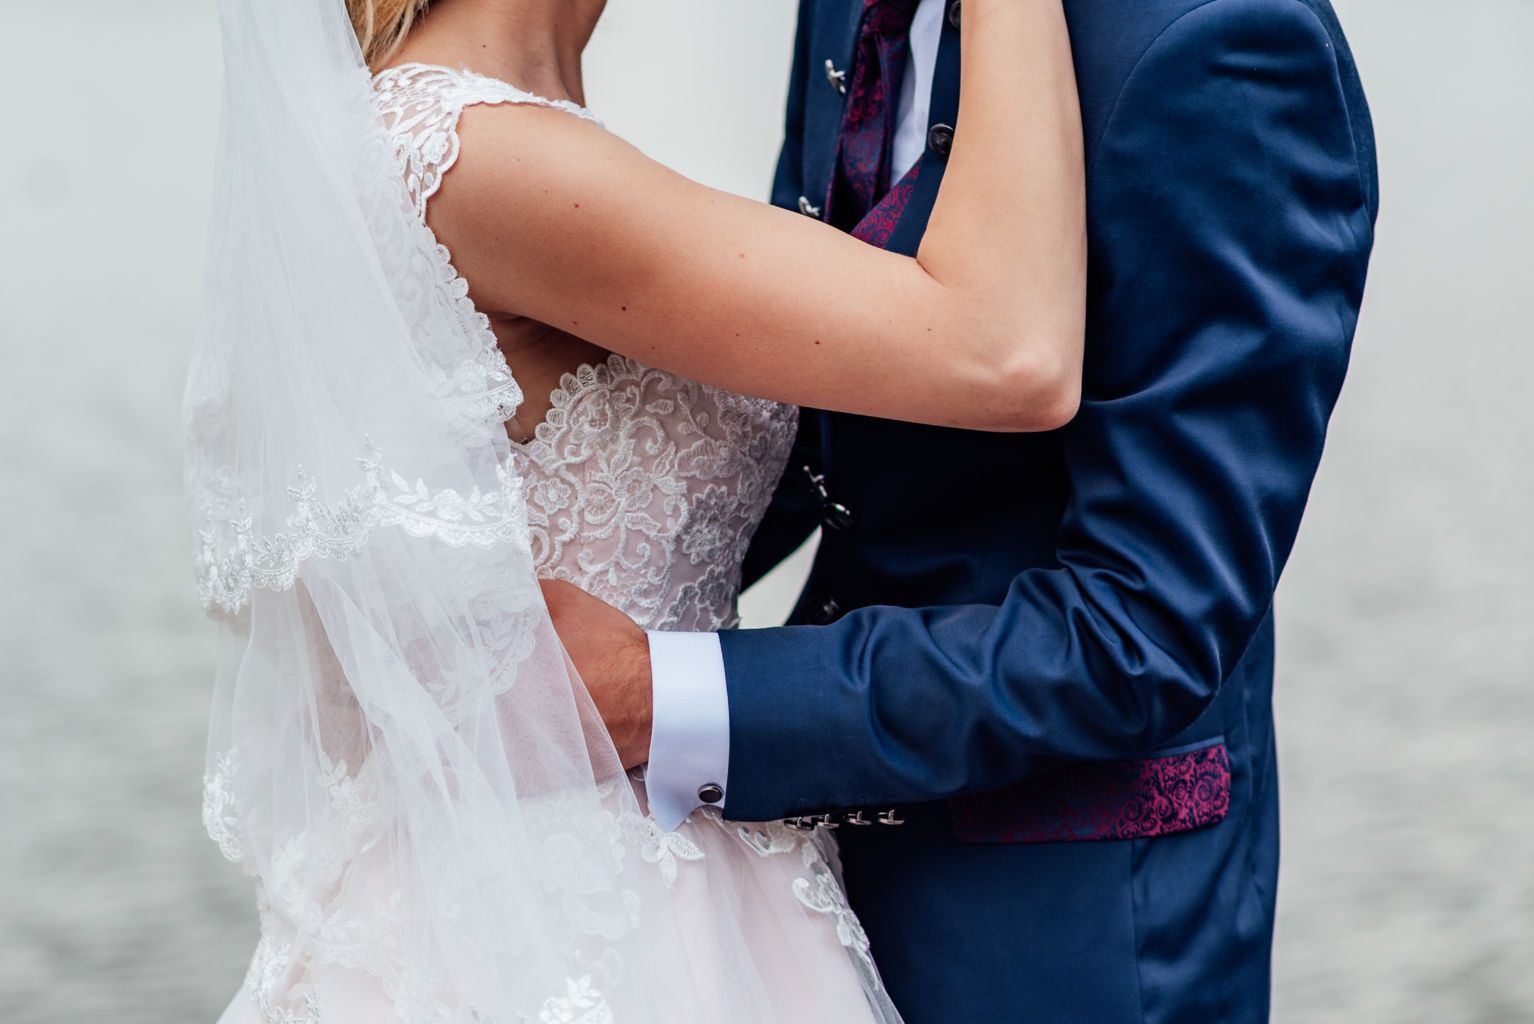 Bryllups klar - Facts og tips!